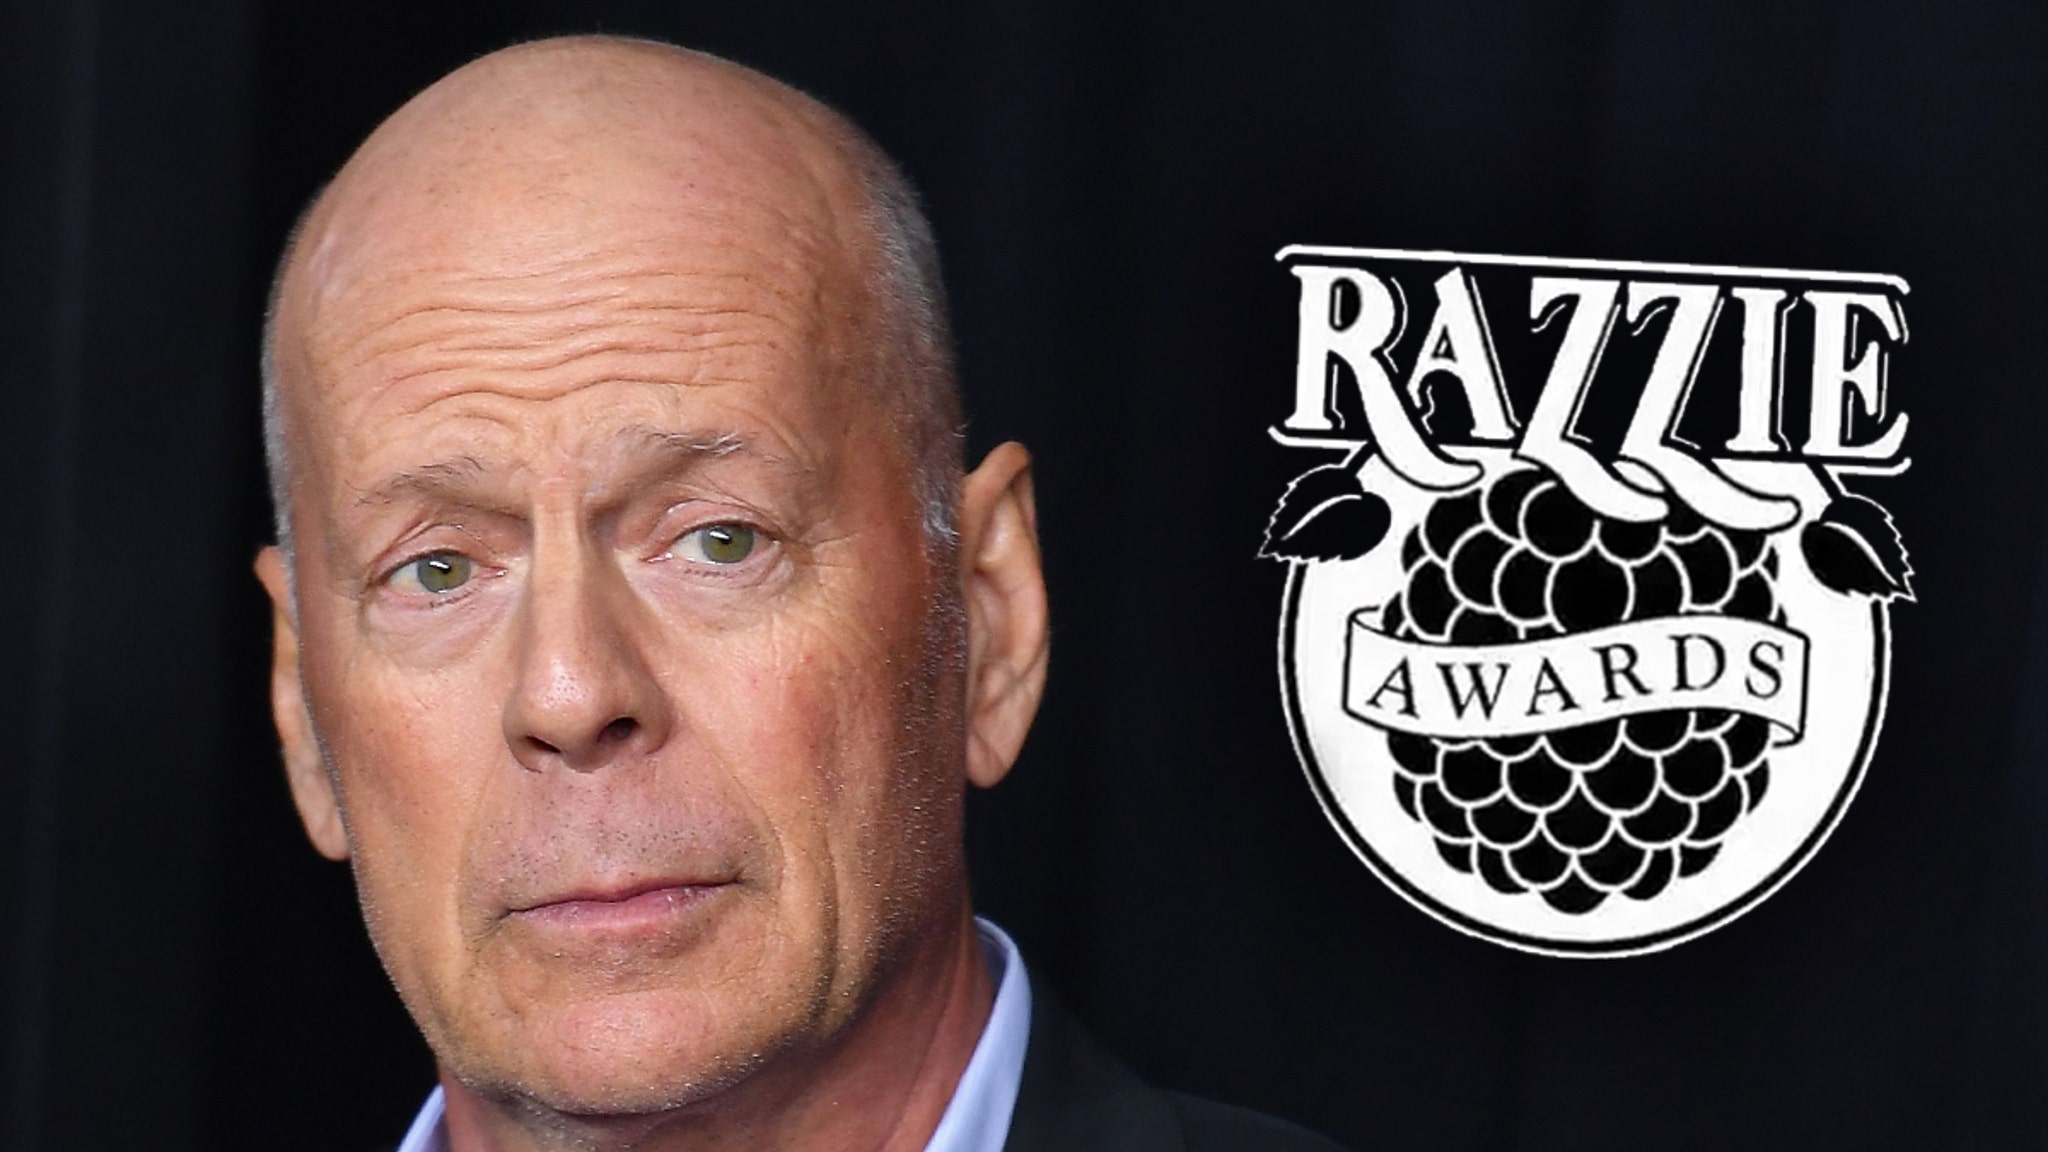 Bruce Willis' 'Worst Performance' Razzie Taken Back After Aphasia News thumbnail